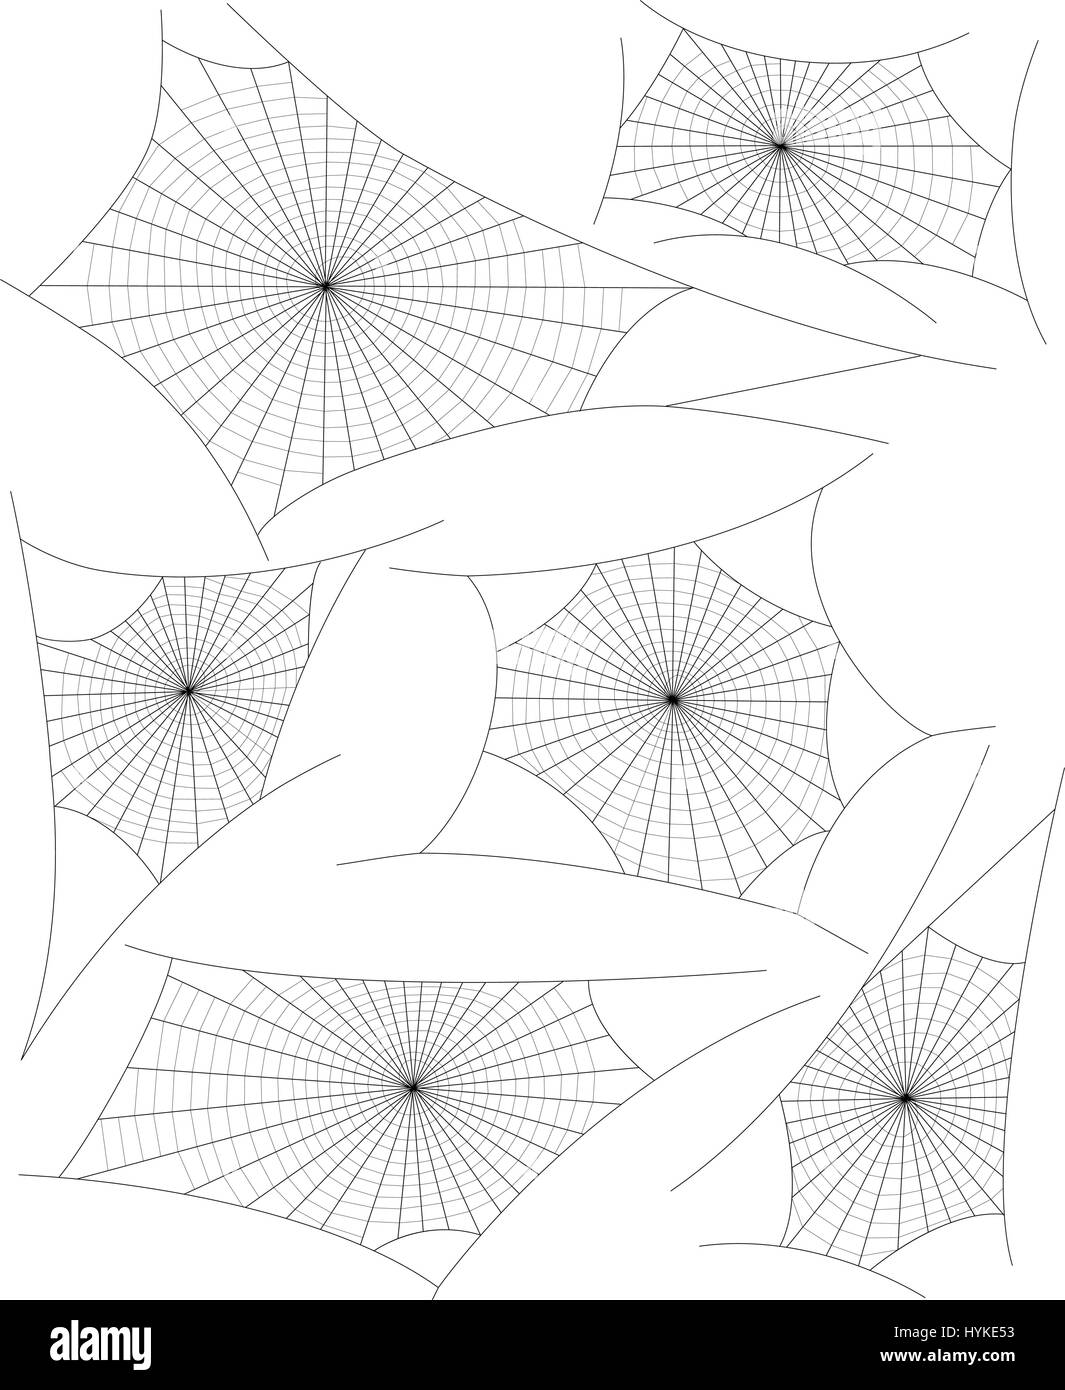 Satz von bearbeitbaren Vektor Radnetze Spinne Stock Vektor